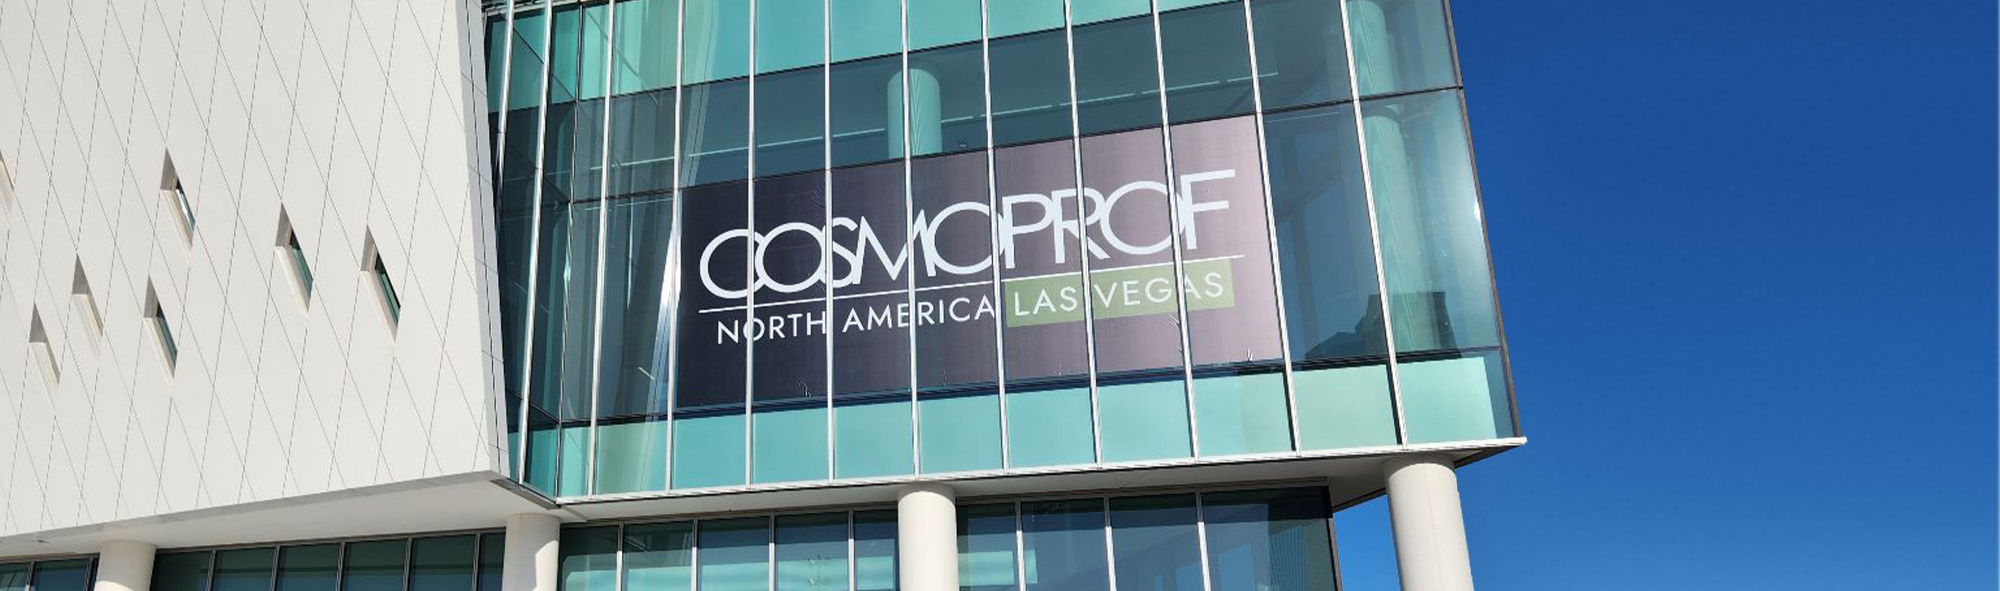 Cosmoprof North America in Las Vegas, a beauty B2B trade show featuring glowoasis vegan skincare.